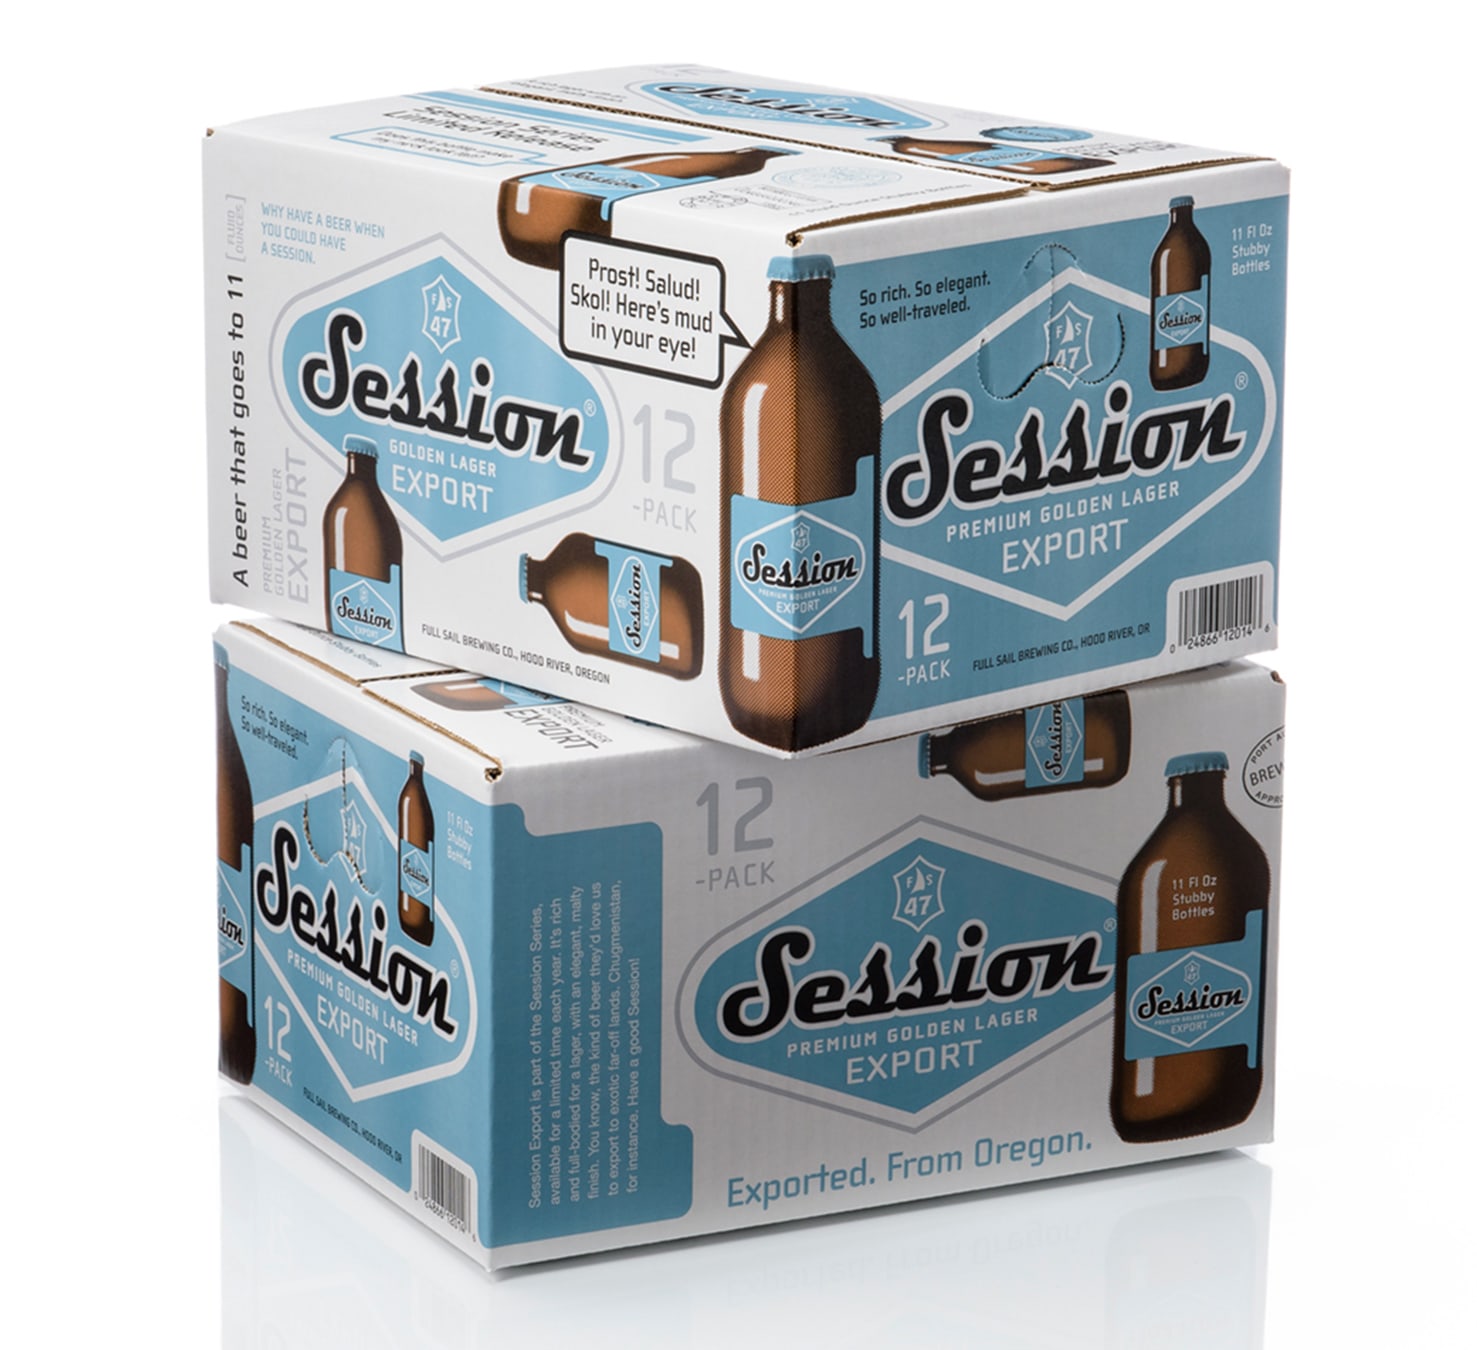 Session beer export packaging design